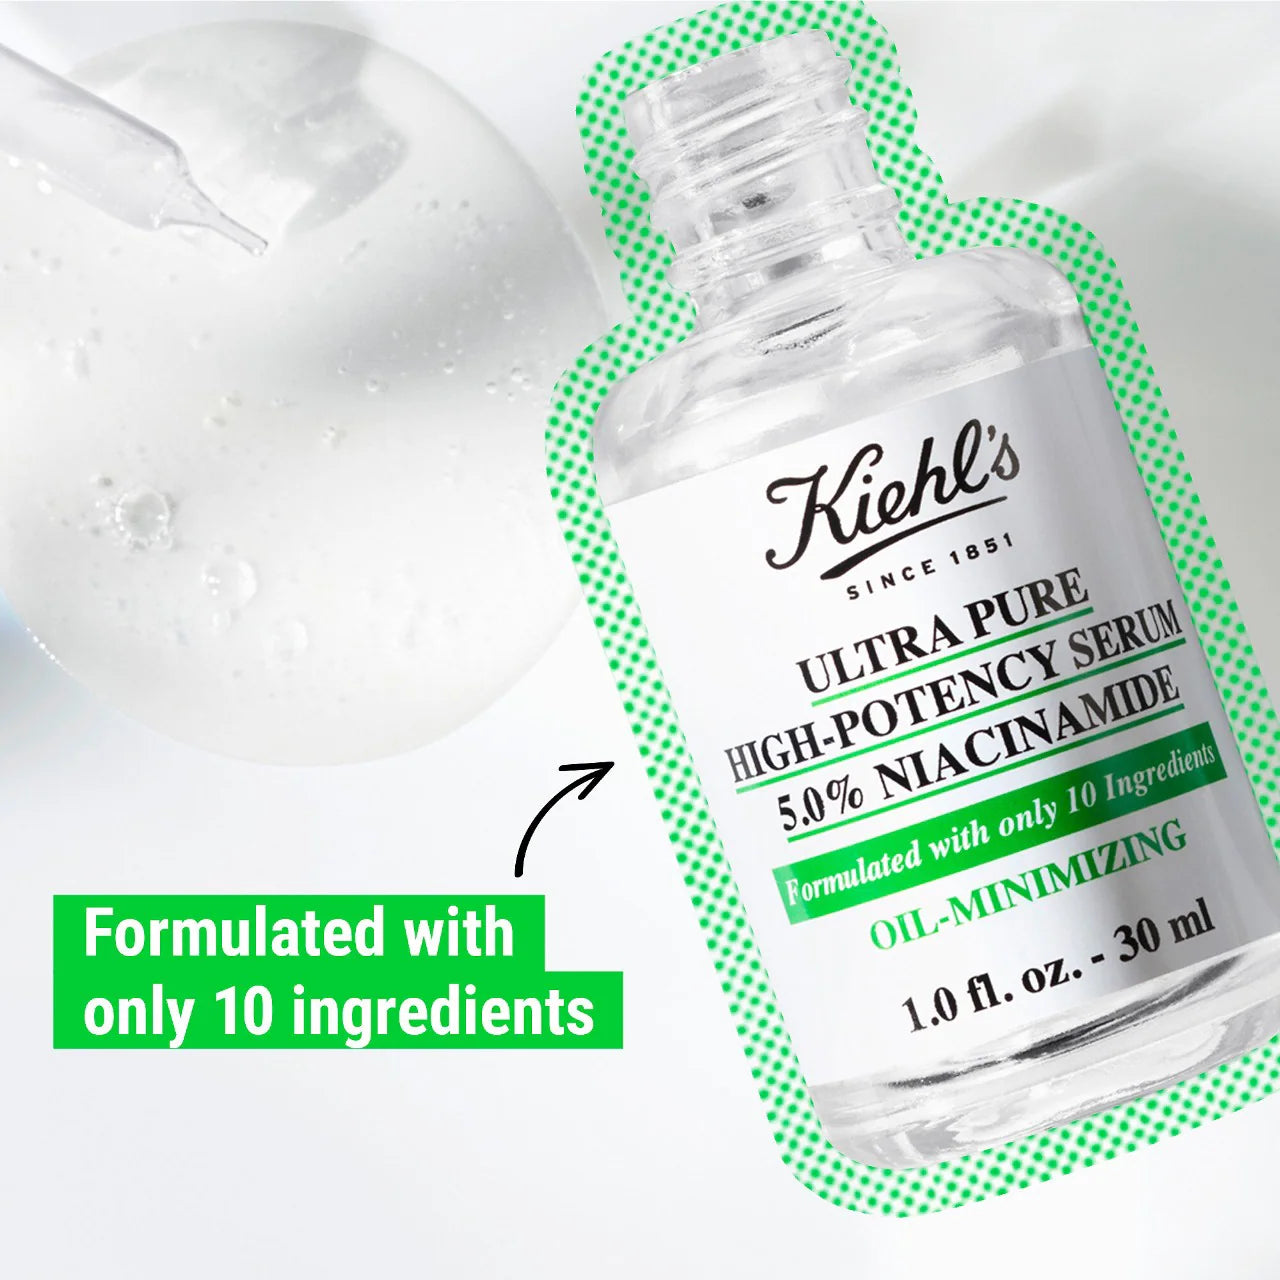 Kiehl's - Ultra Pure High-Potency 5.0% Niacinamide Serum | 30 mL